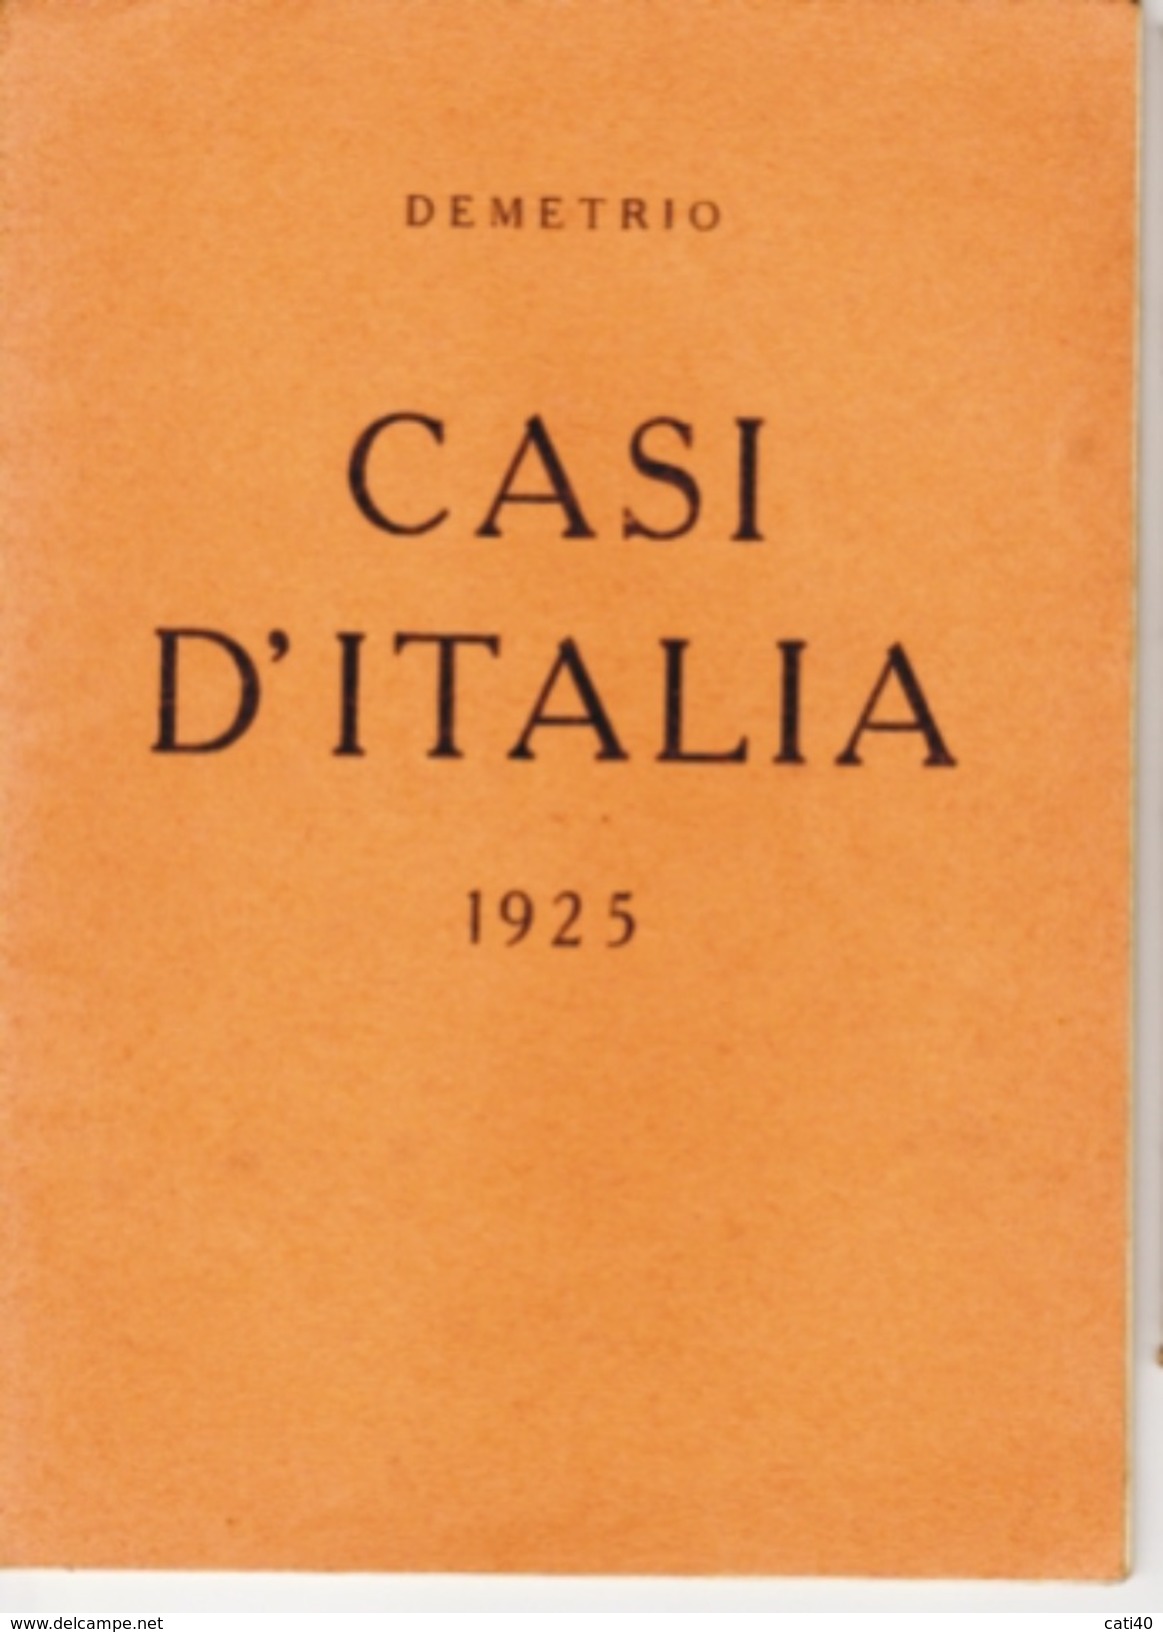 POLITICA ANTIFASCISTA  DEMETRIO CASI D'ITALIA 1925 COOP.GRAFICA OPERAI MILANO - Storia, Filosofia E Geografia